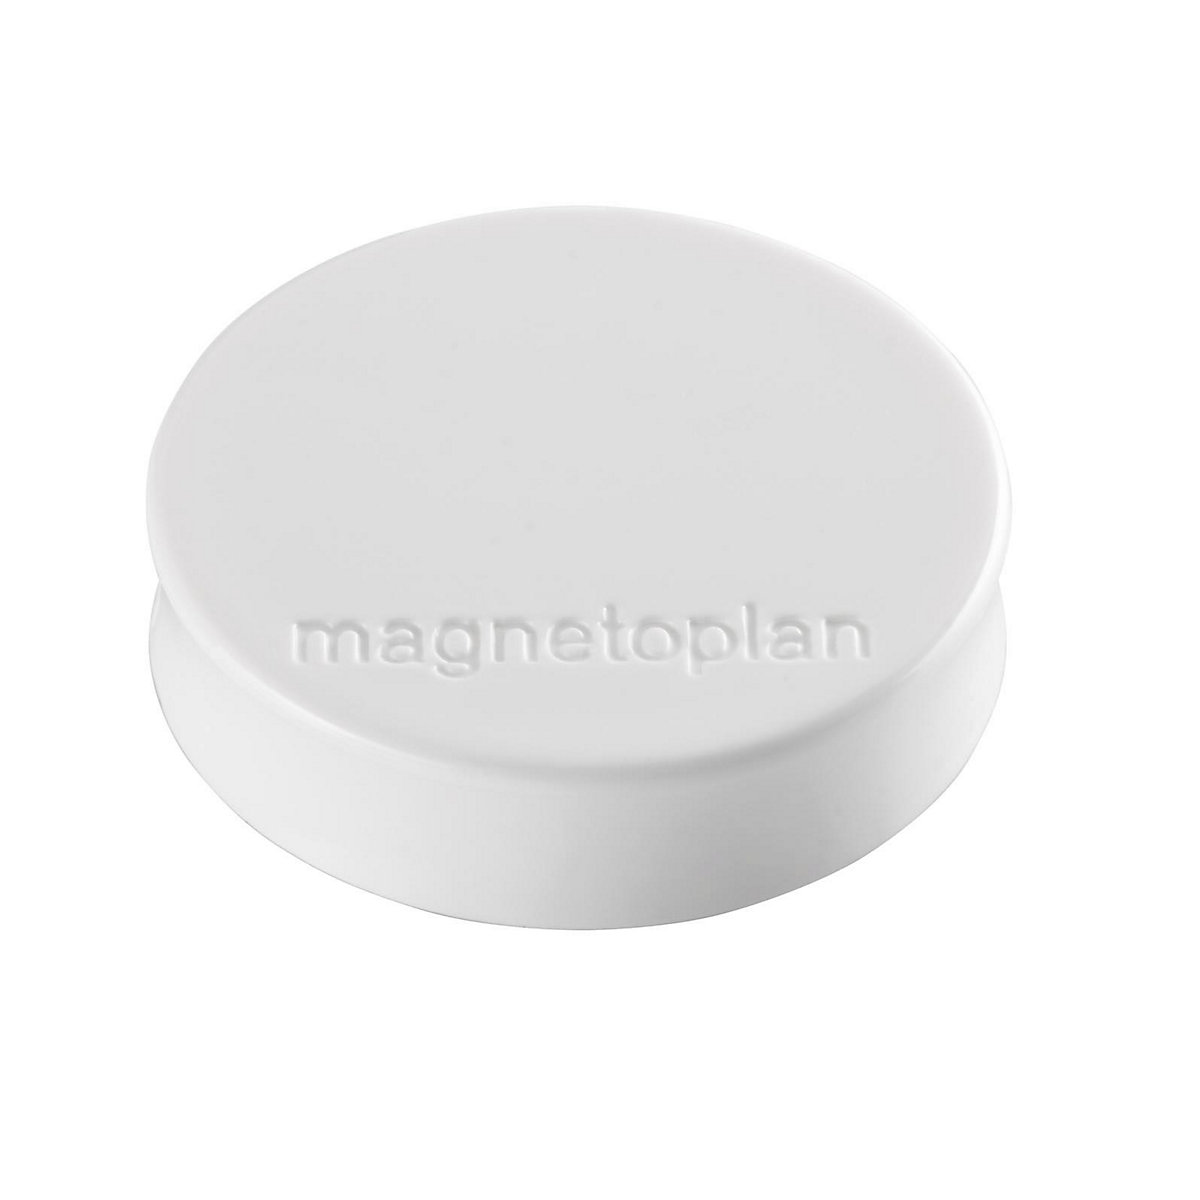 Ergo-Magnet magnetoplan